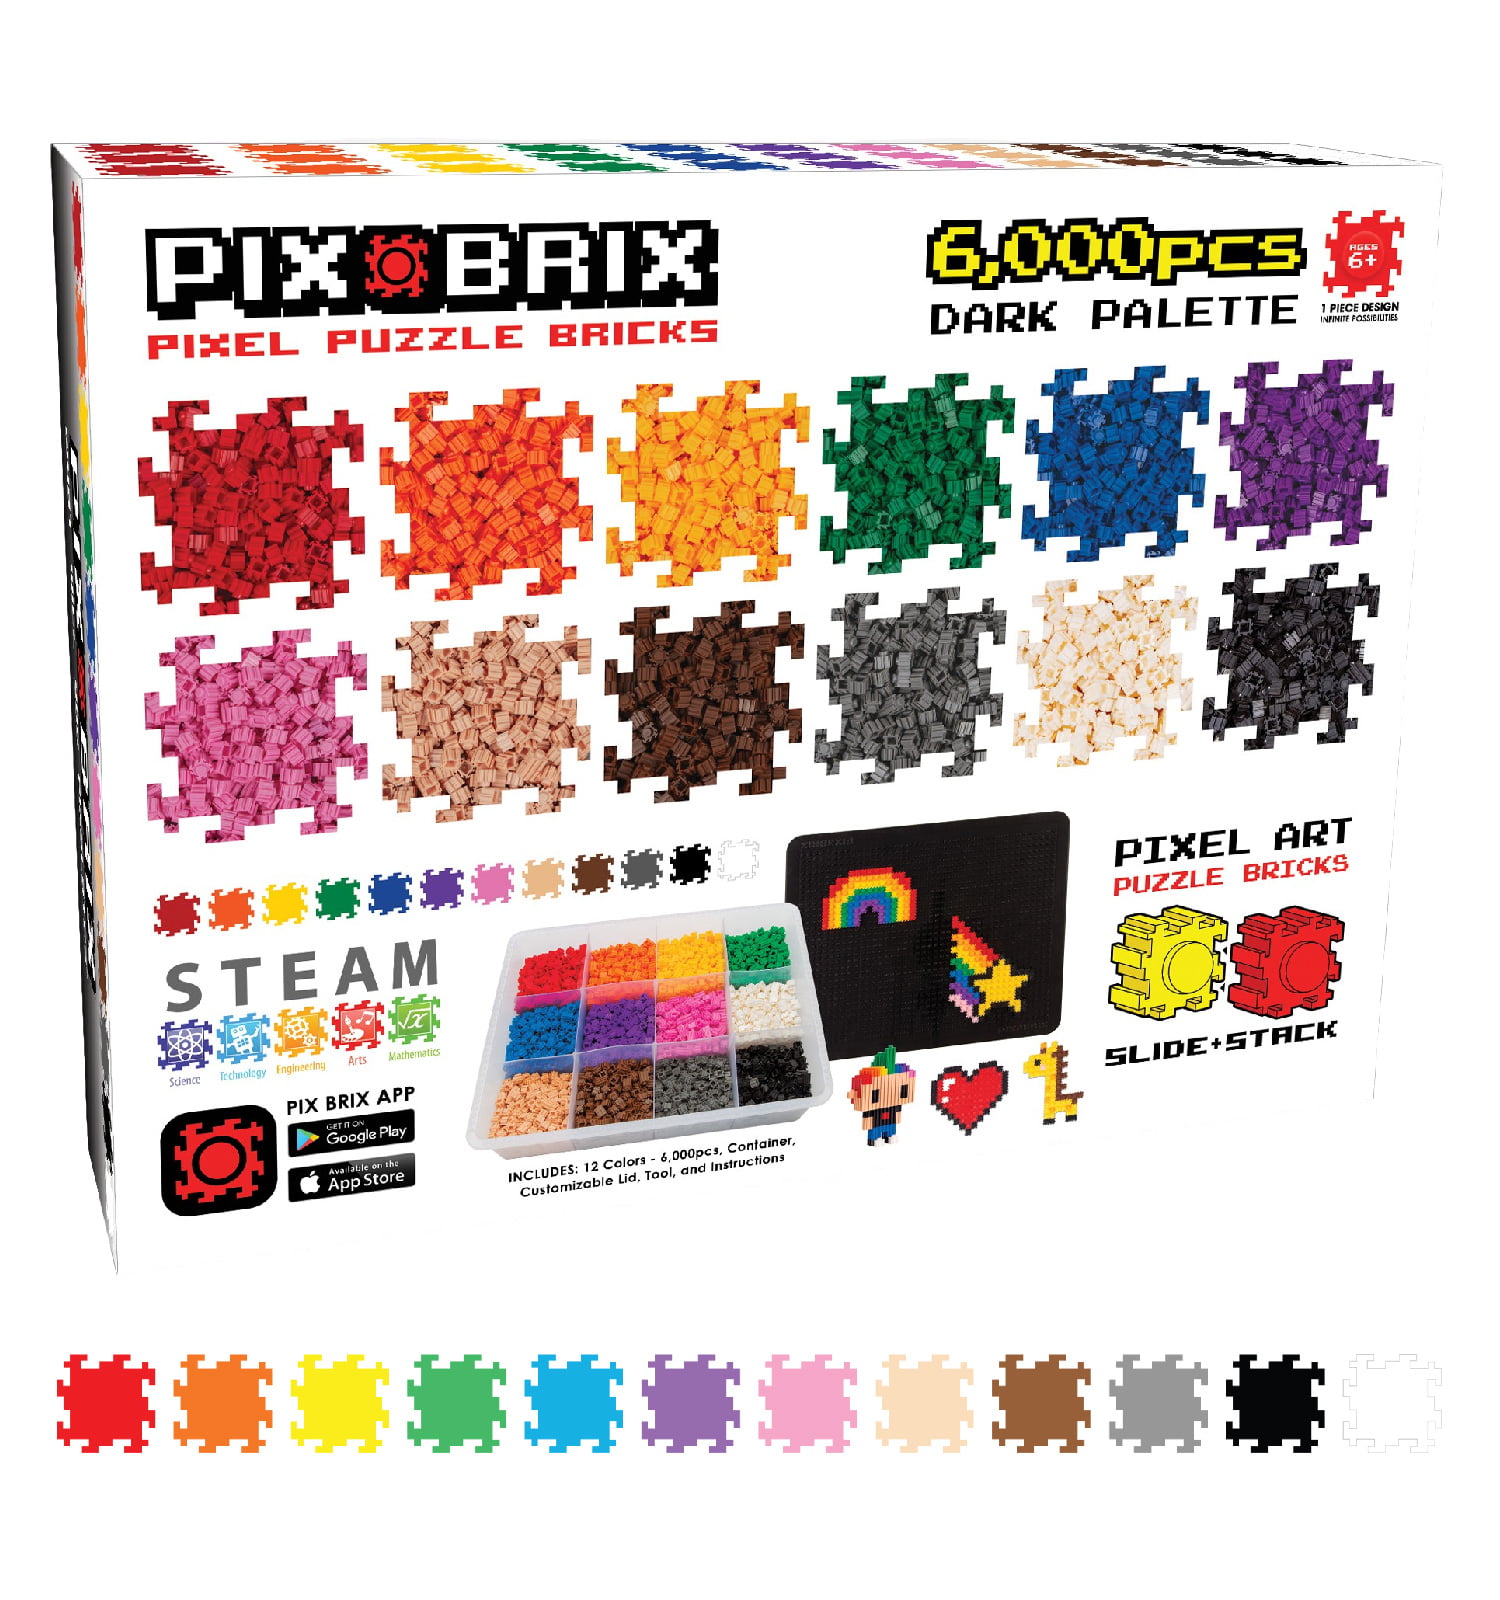 Pix Brix Pixel Art Puzzle Bricks – 6,000 Piece Pixel Art Container, 12  Color Dark Palette – Patented Interlocking Building Bricks, Create 2D and  3D 